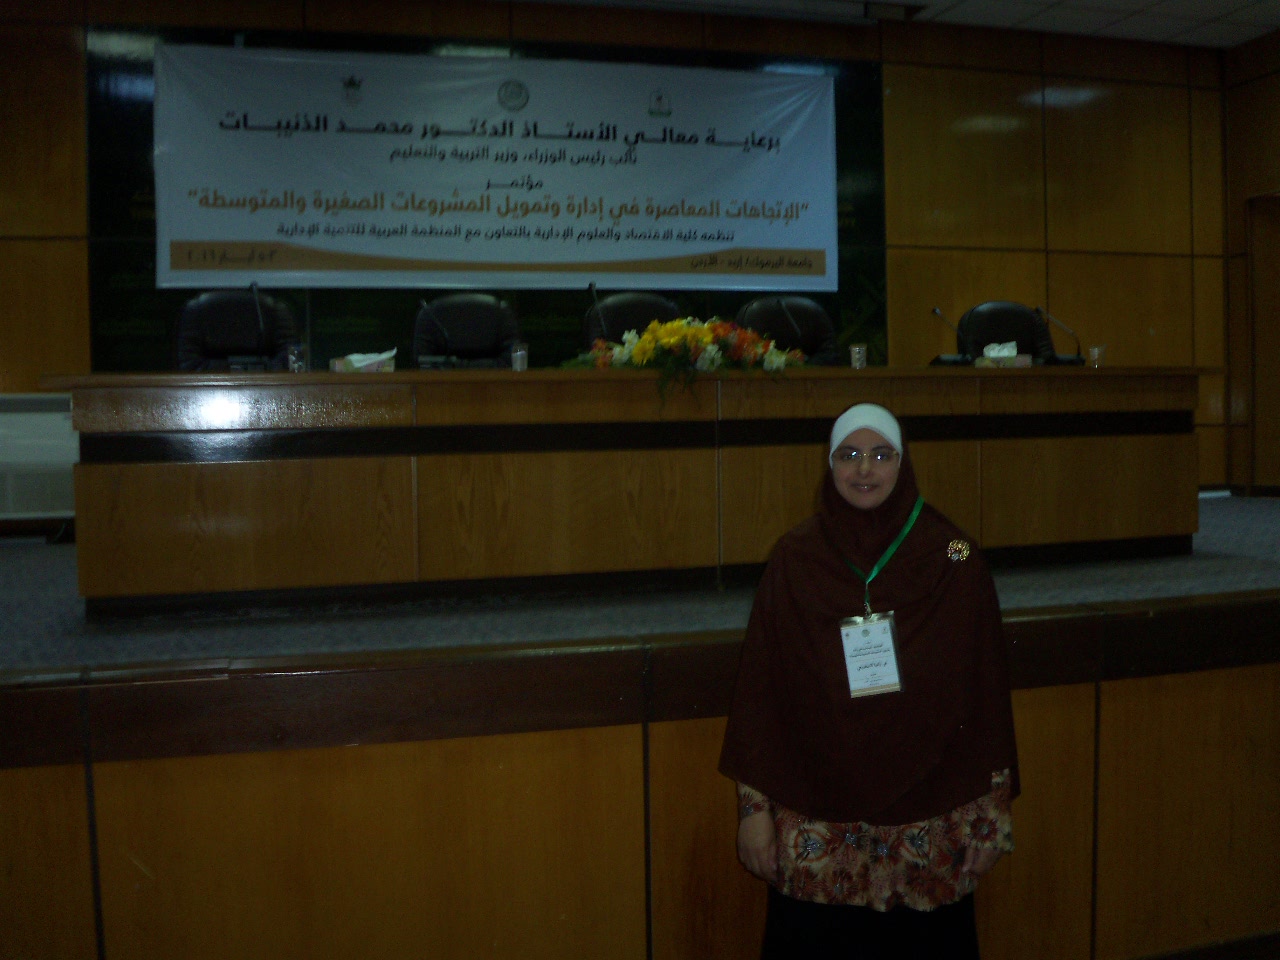 Speaking at SMEs conference, by Arab Administrative Development Organization (ARADO), at Yarmouk University, May 2016, Irbid, Jordan